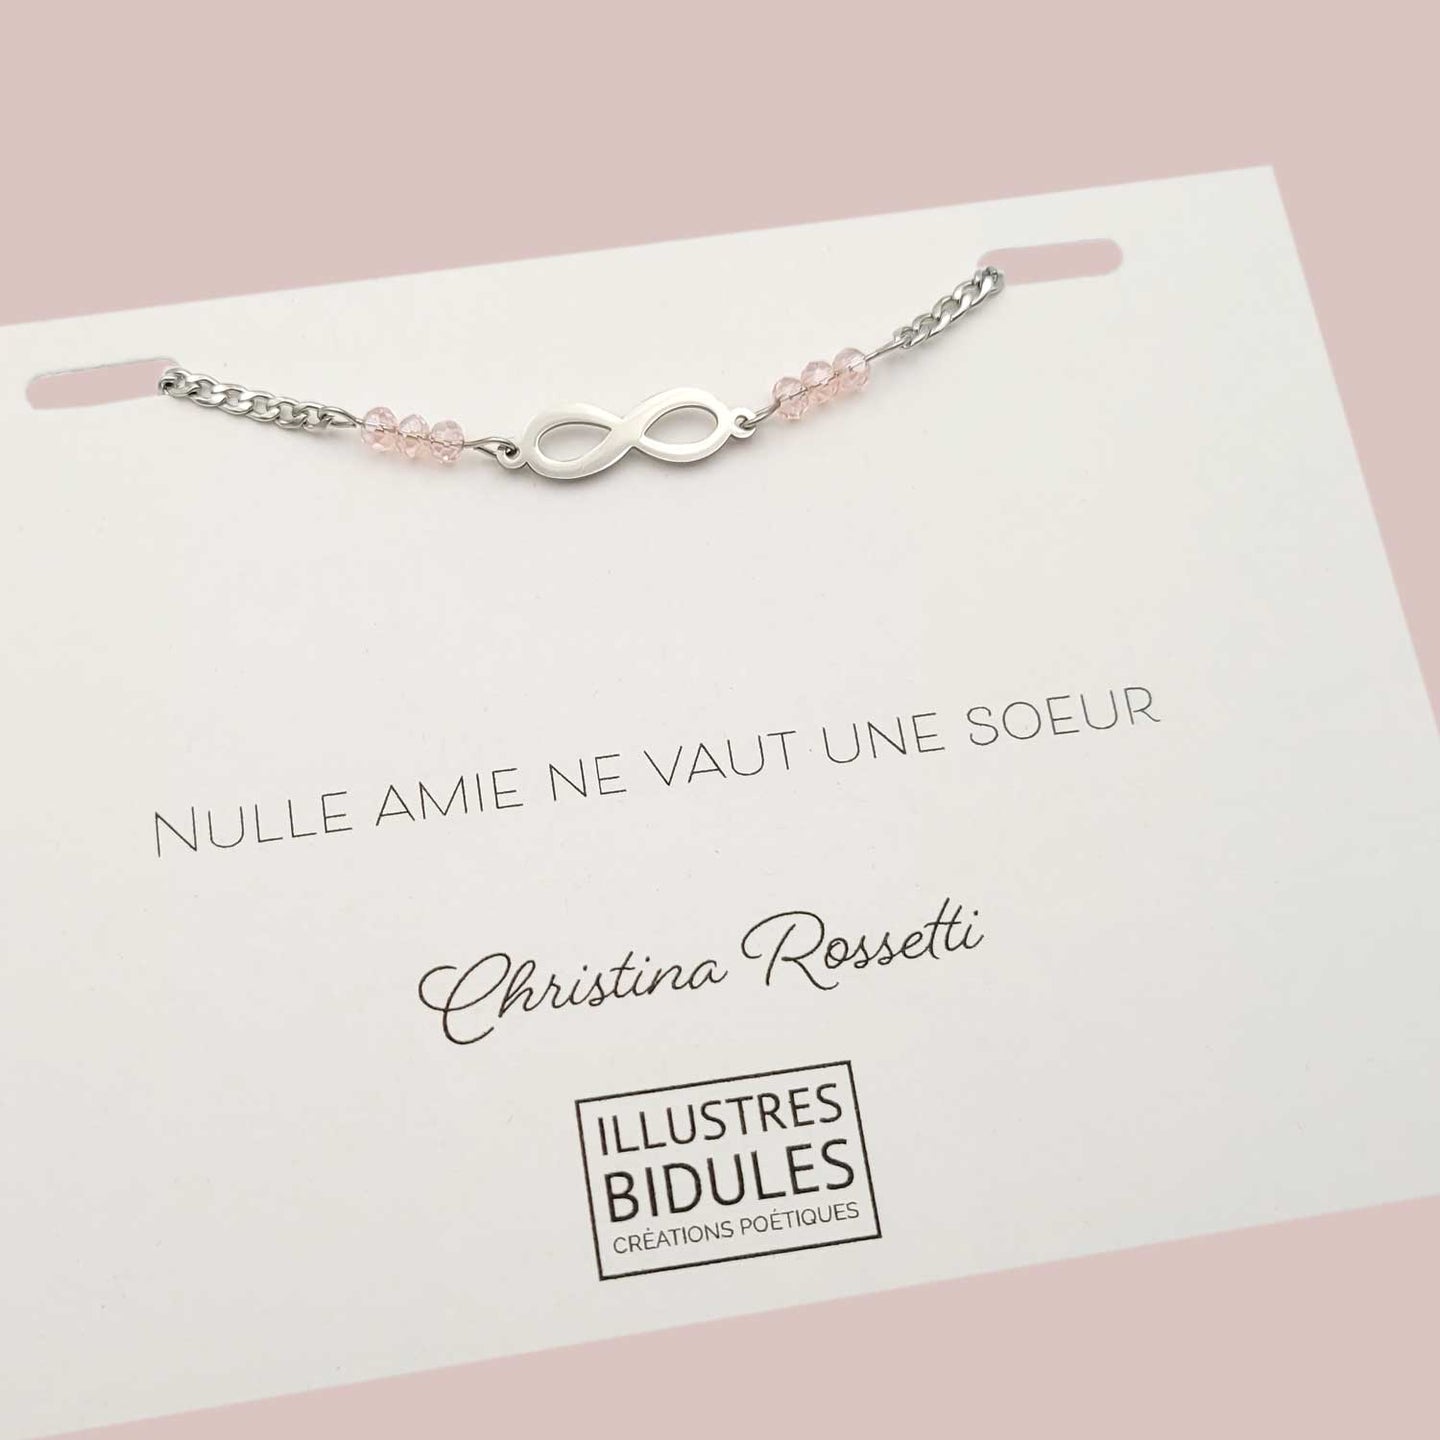 Bracelet Inox: infini rose cristal - Nulle amie ne vaut une soeur